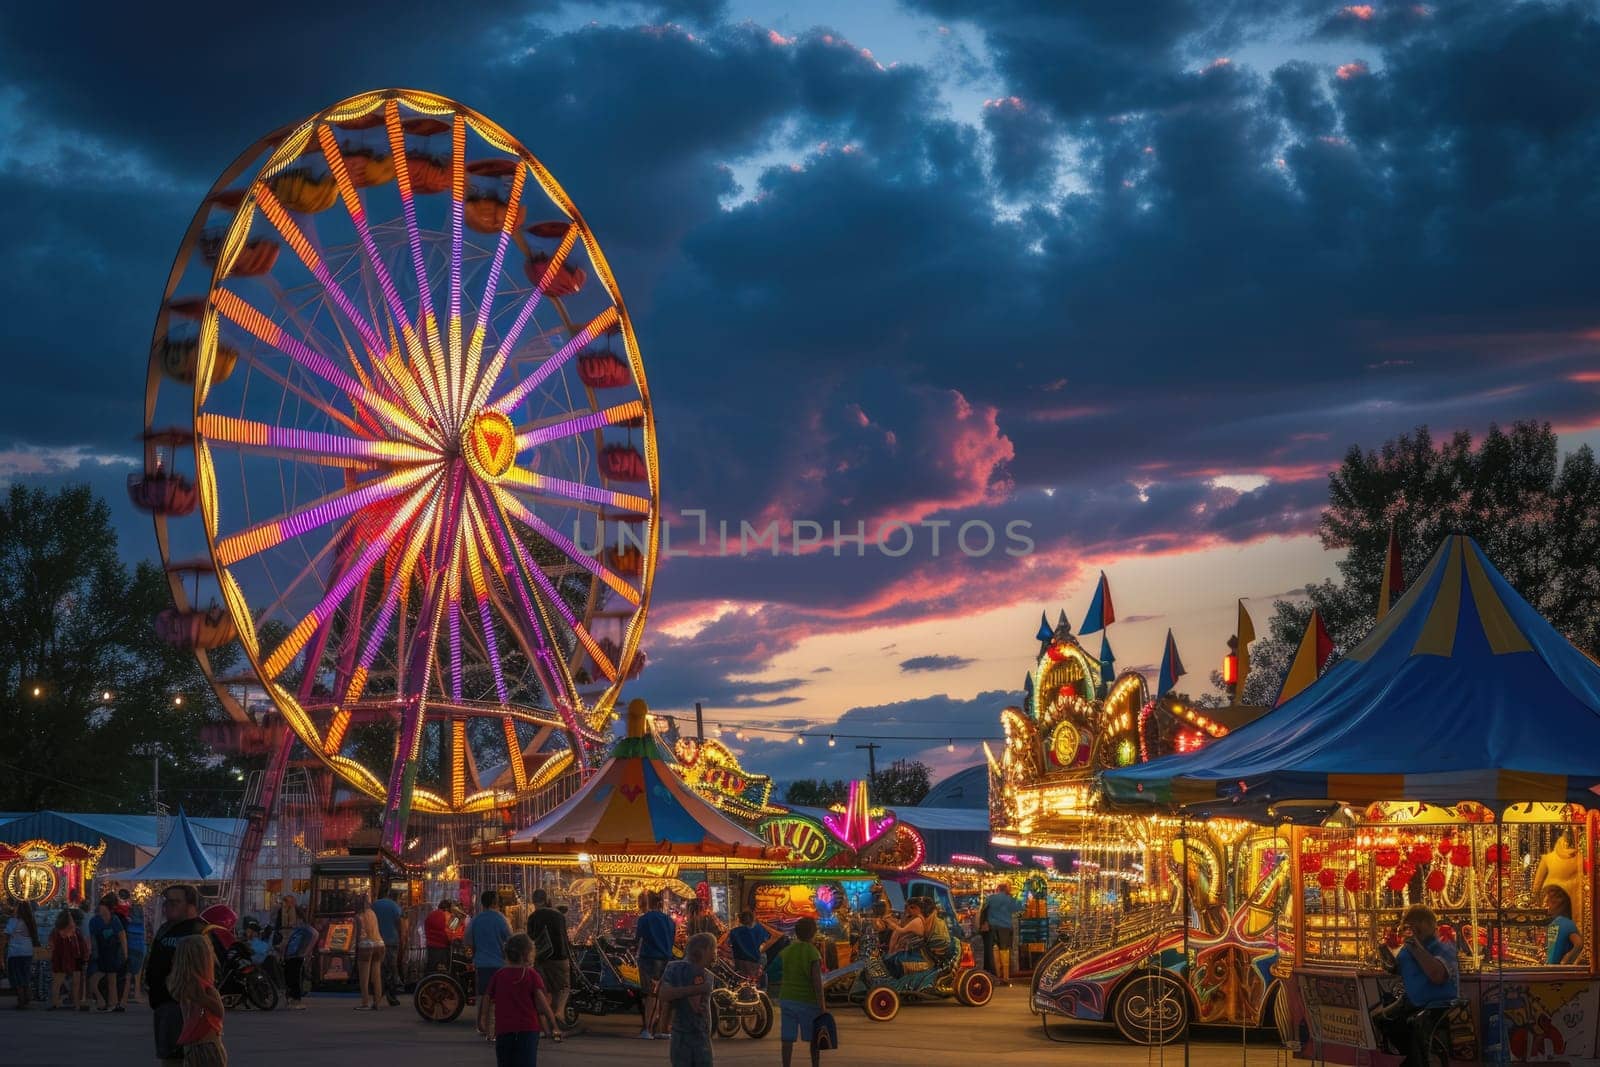 A lively carnival at dusk, Ferris wheel lights. Resplendent. by biancoblue